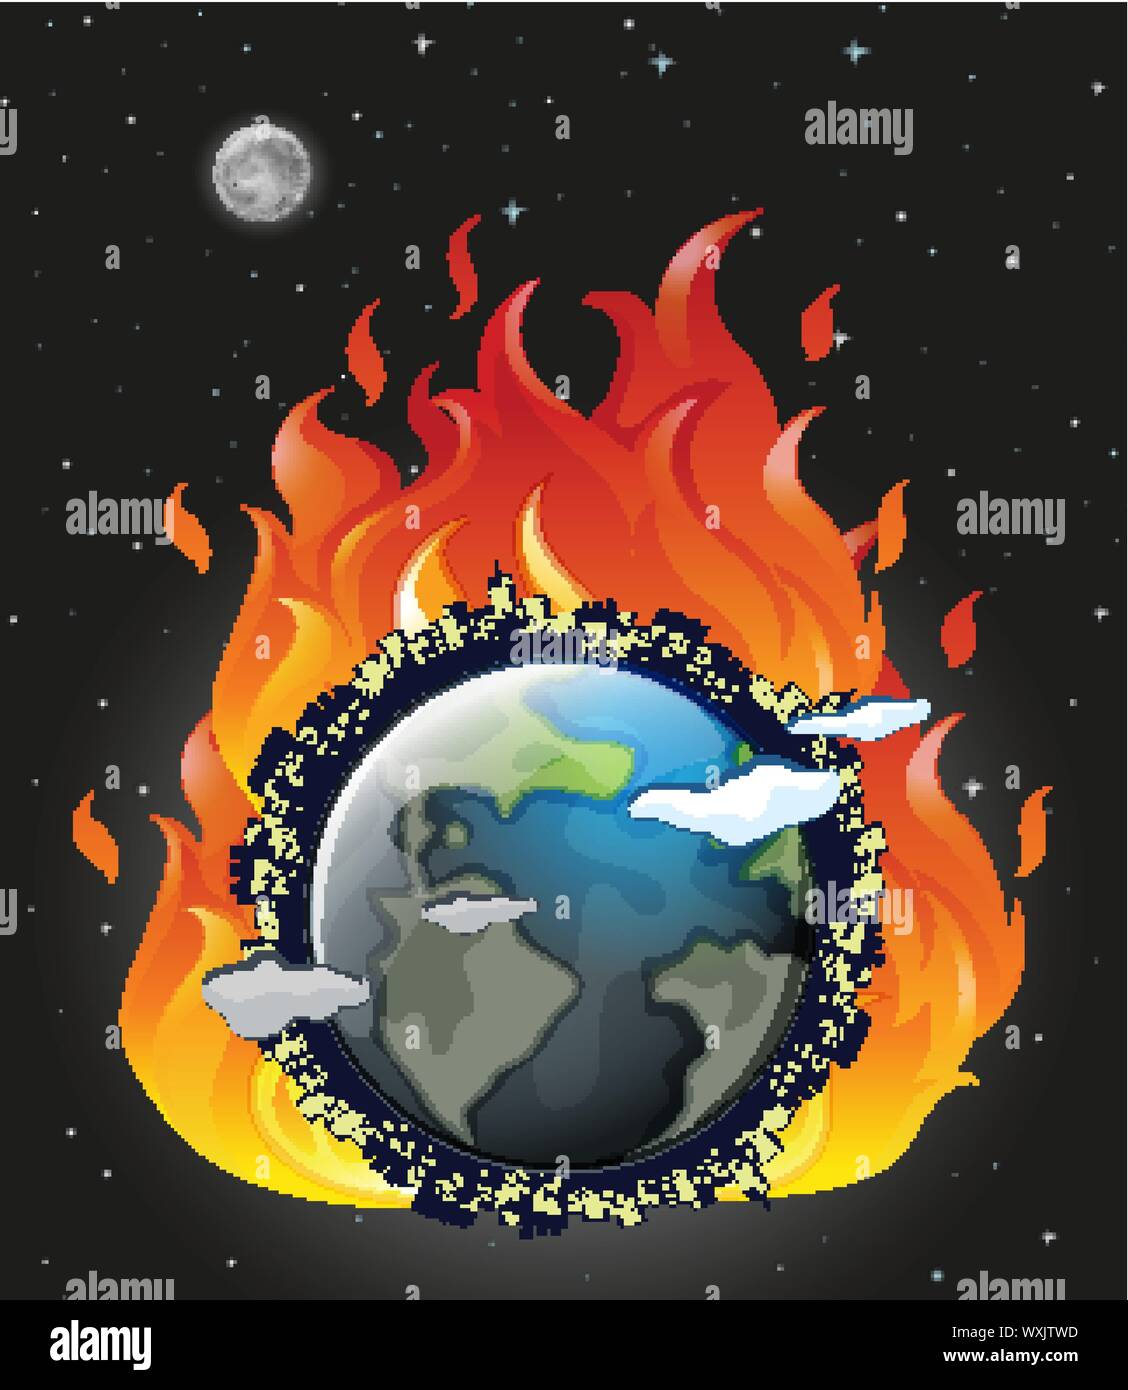 Globale Erwärmung Poster mit Erde auf Feuer illustration Stock Vektor